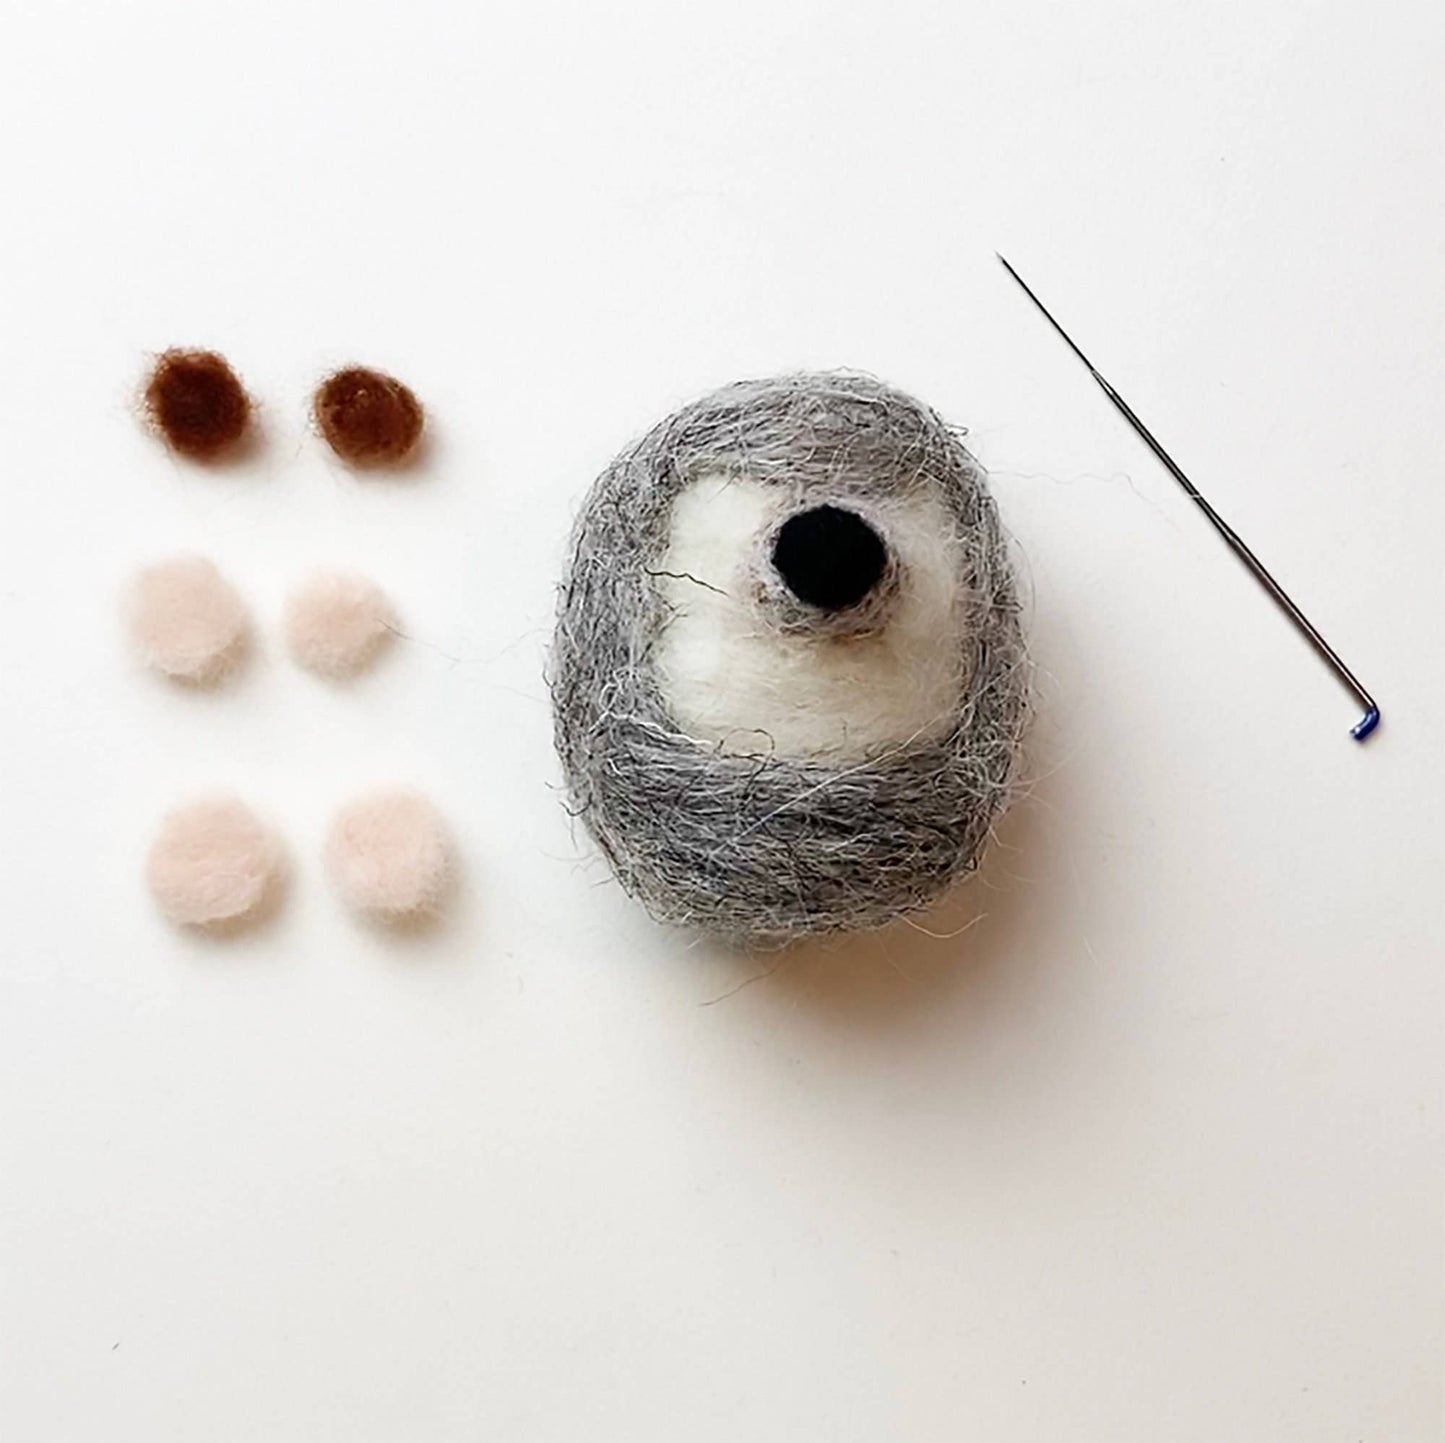 Needle Felting Kit, Hedgehog, Beginners, Creative Gift Idea